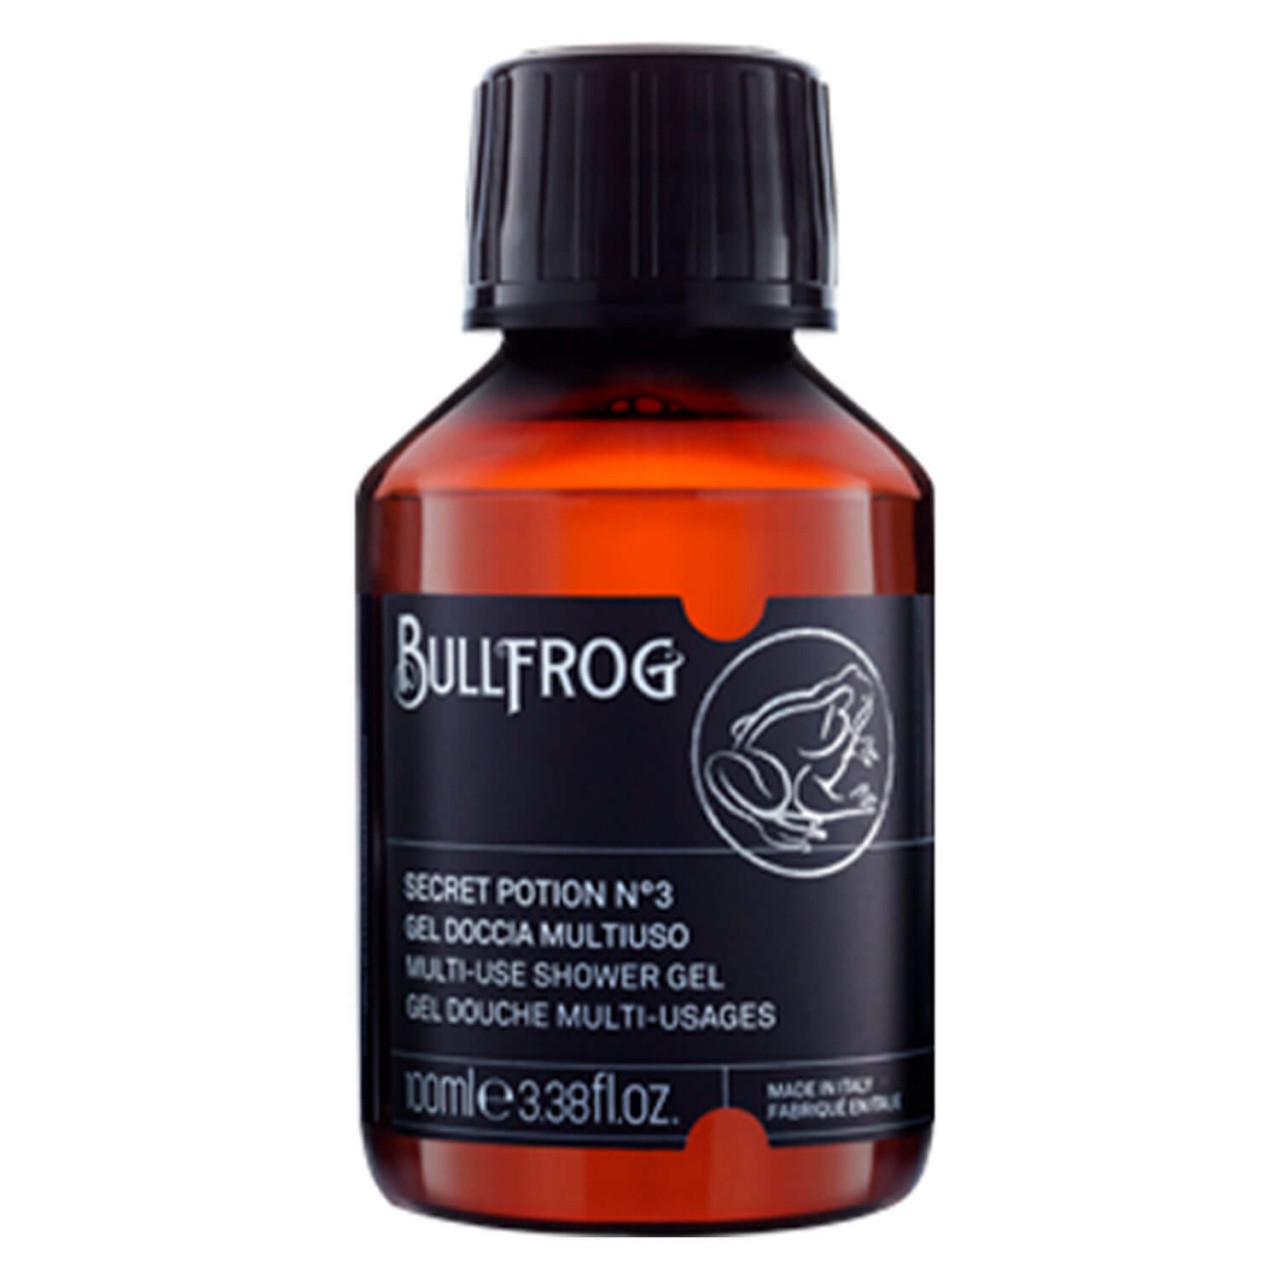 BULLFROG - Multi-Use Shower Gel Secret Potion N°3 von BULLFROG